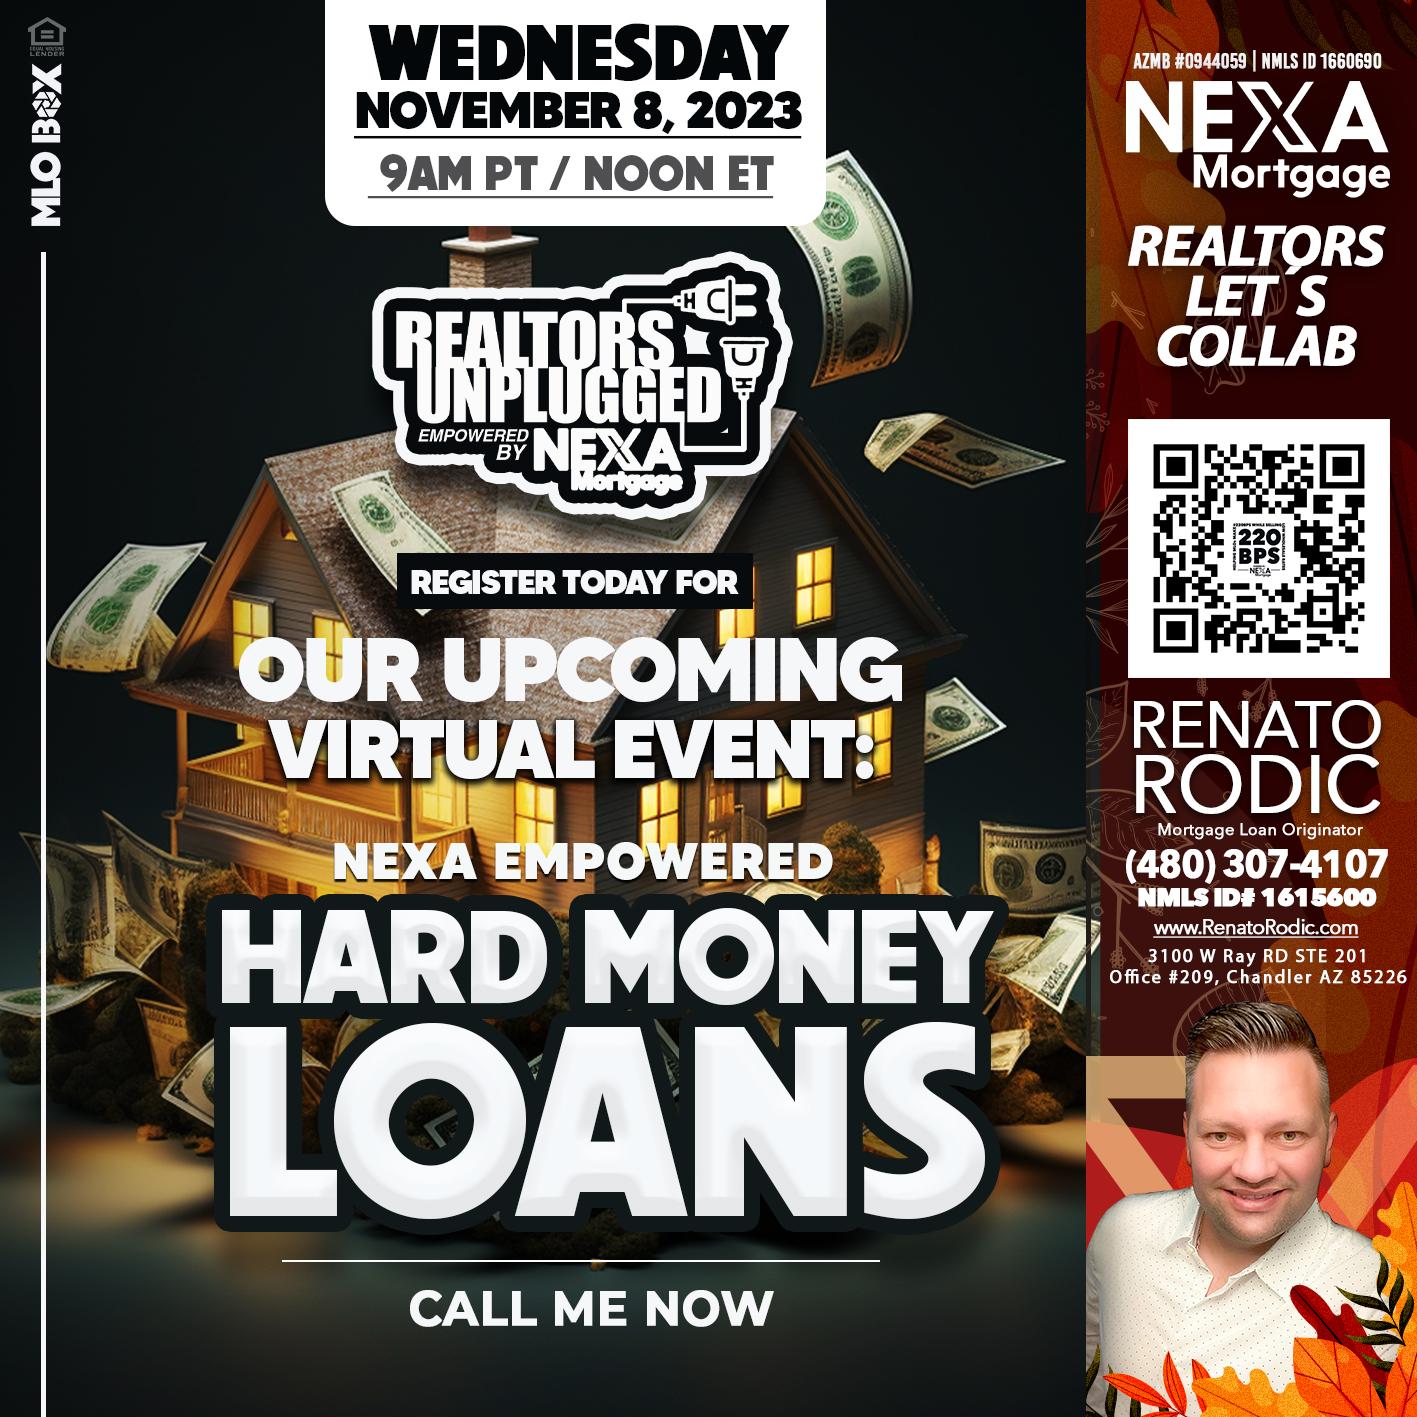 realtors lets collab - Renato Rodic -Mortgage Loan Originator